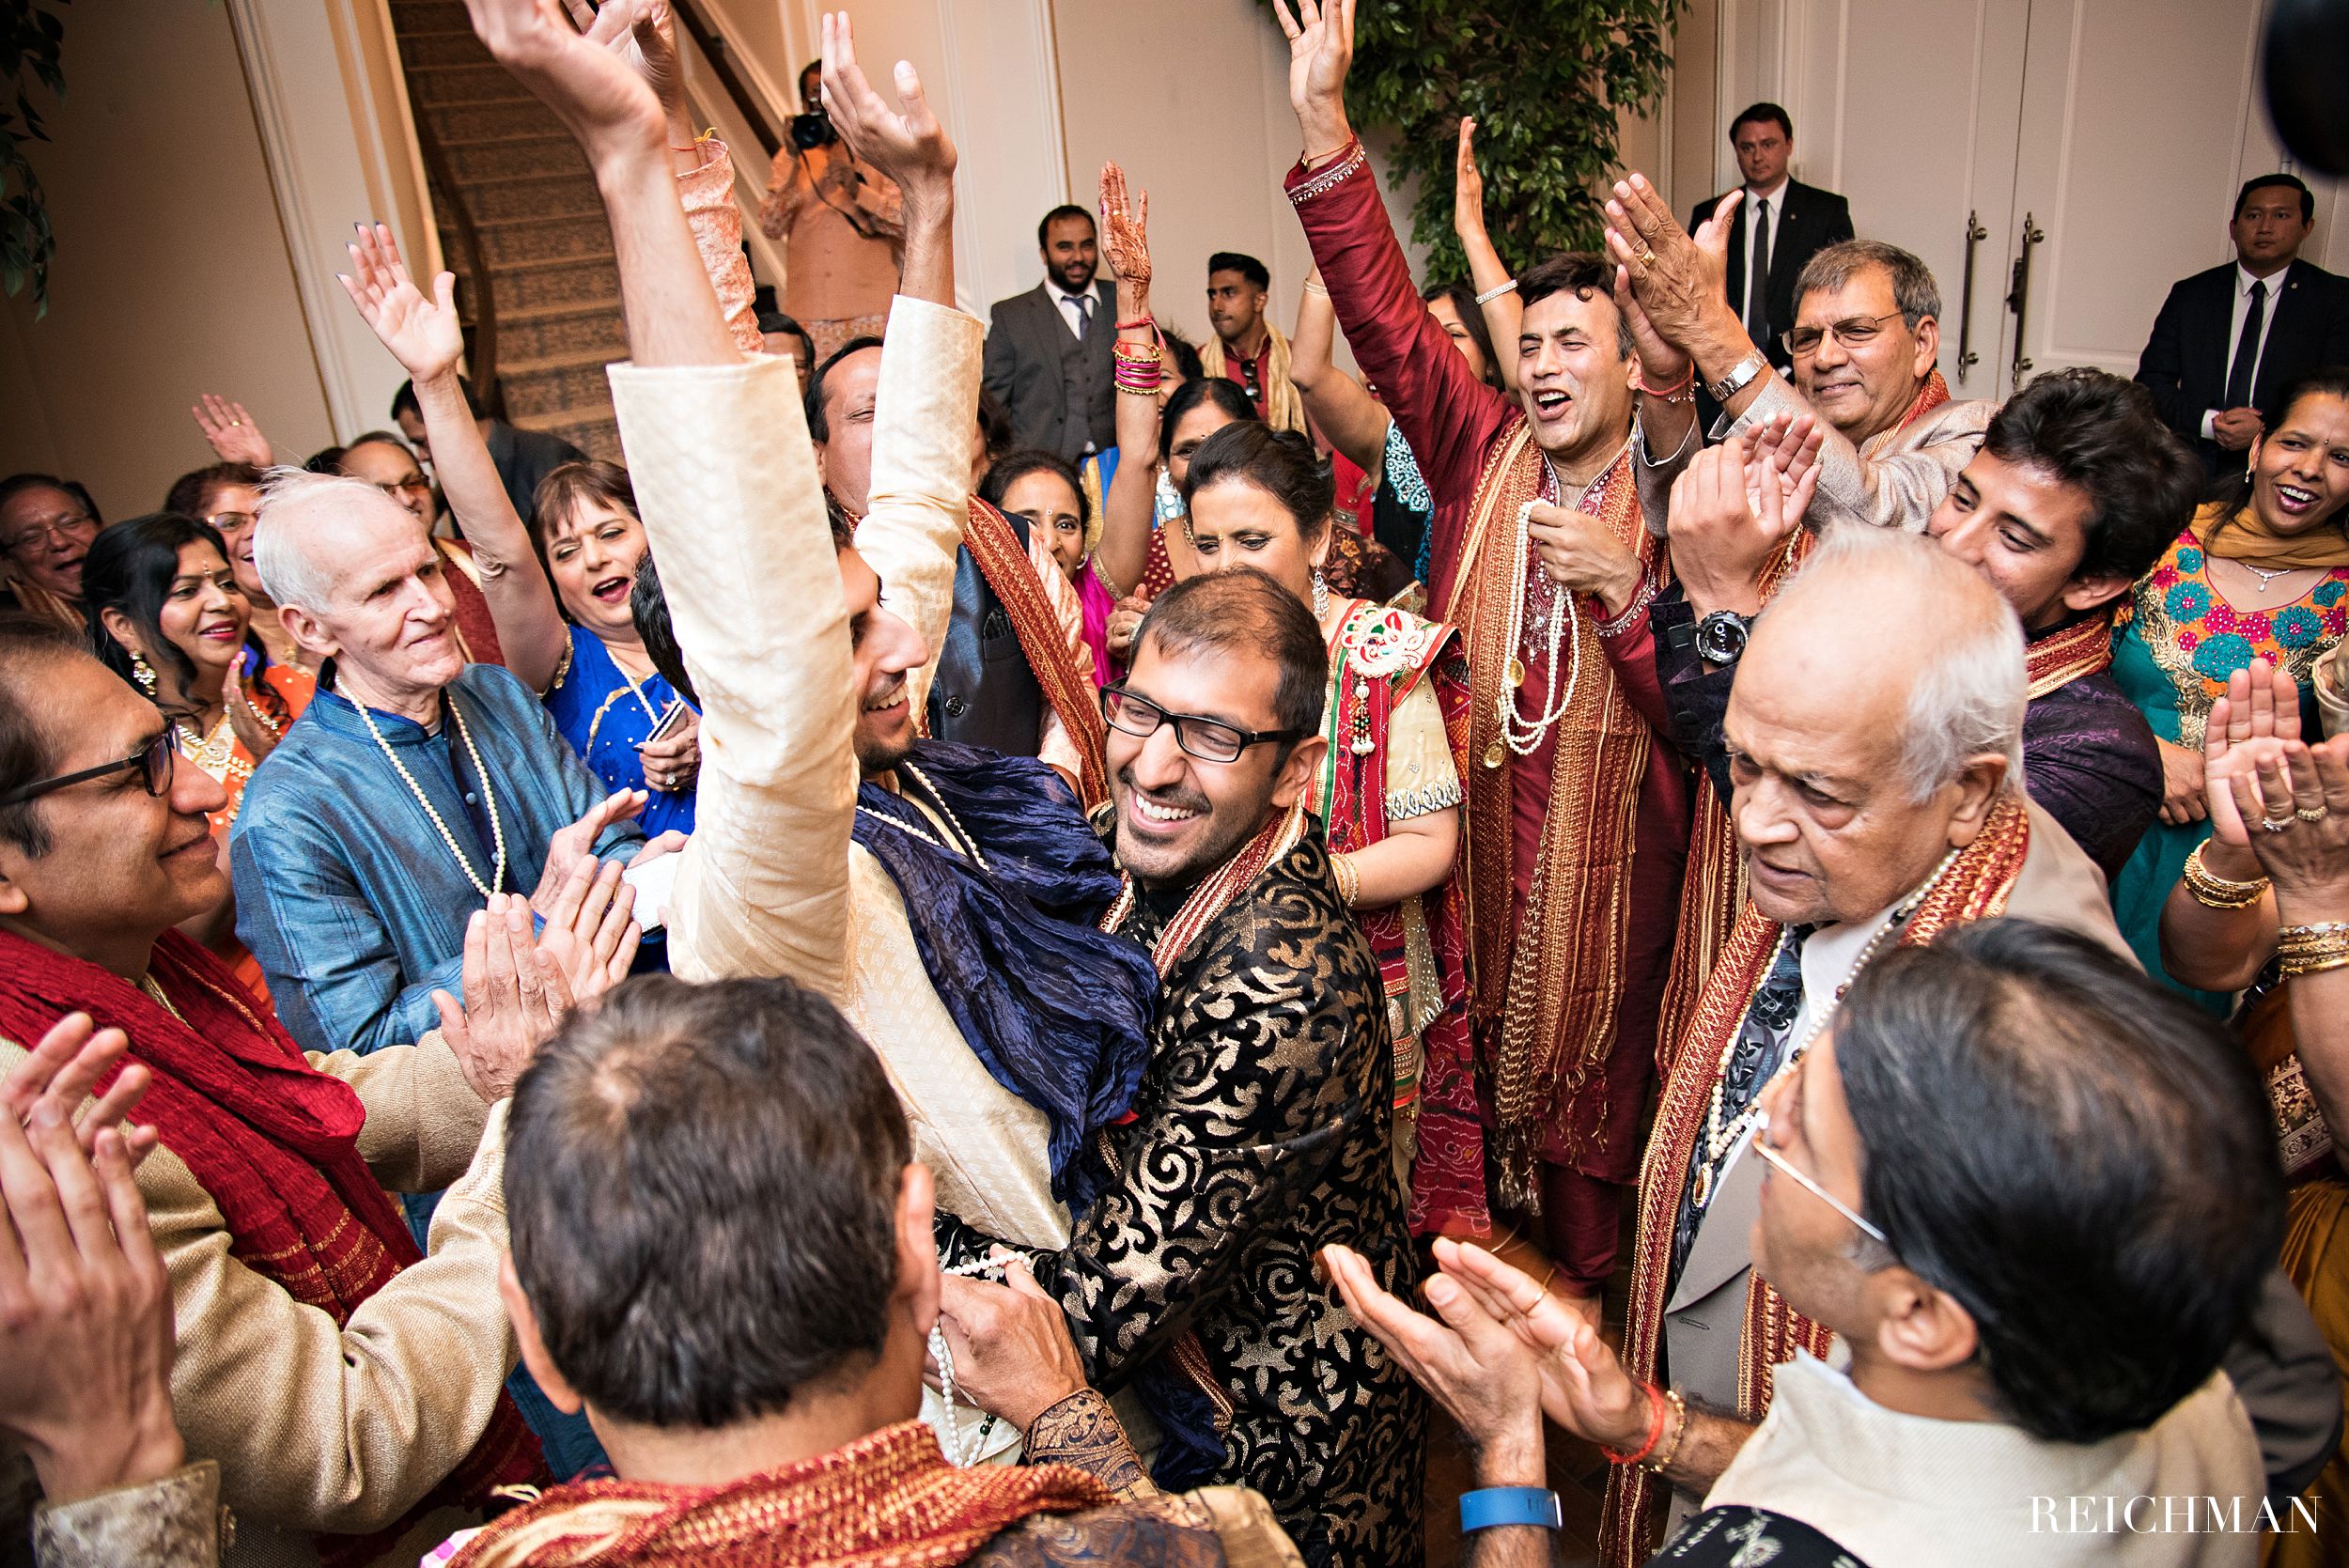 049st-regis-atlanta-hindu-wedding-049